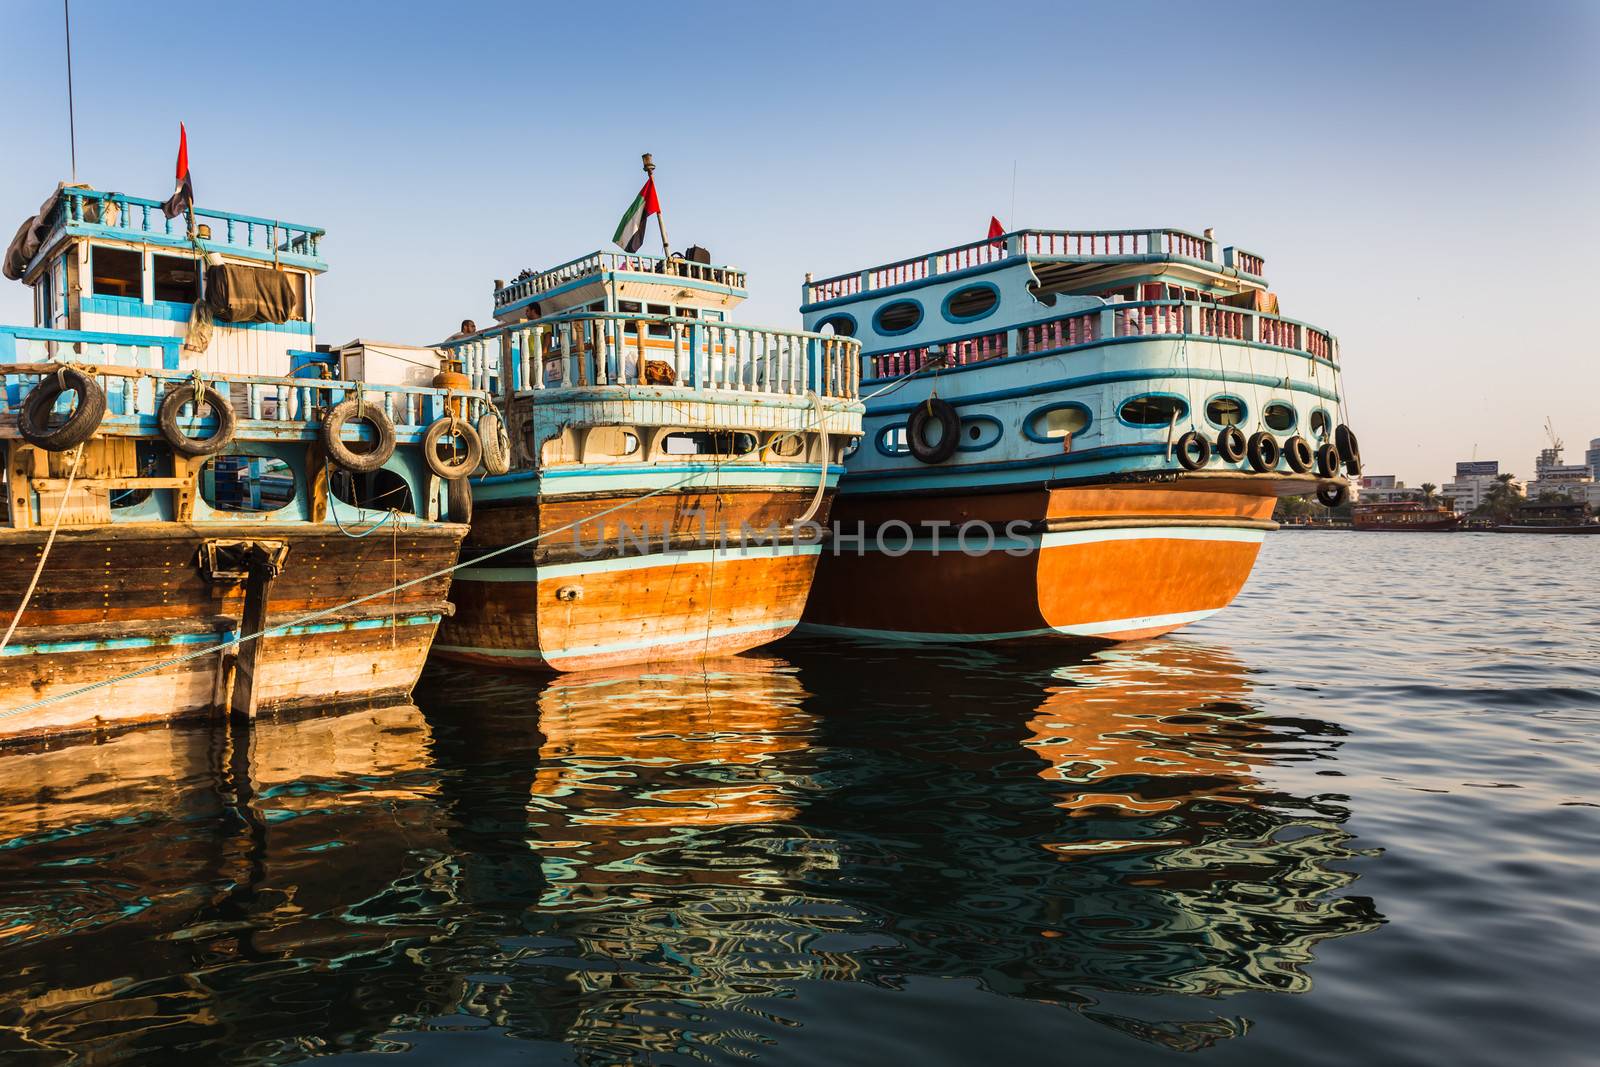  Boats on the Bay Creek in Dubai, UAE by oleg_zhukov